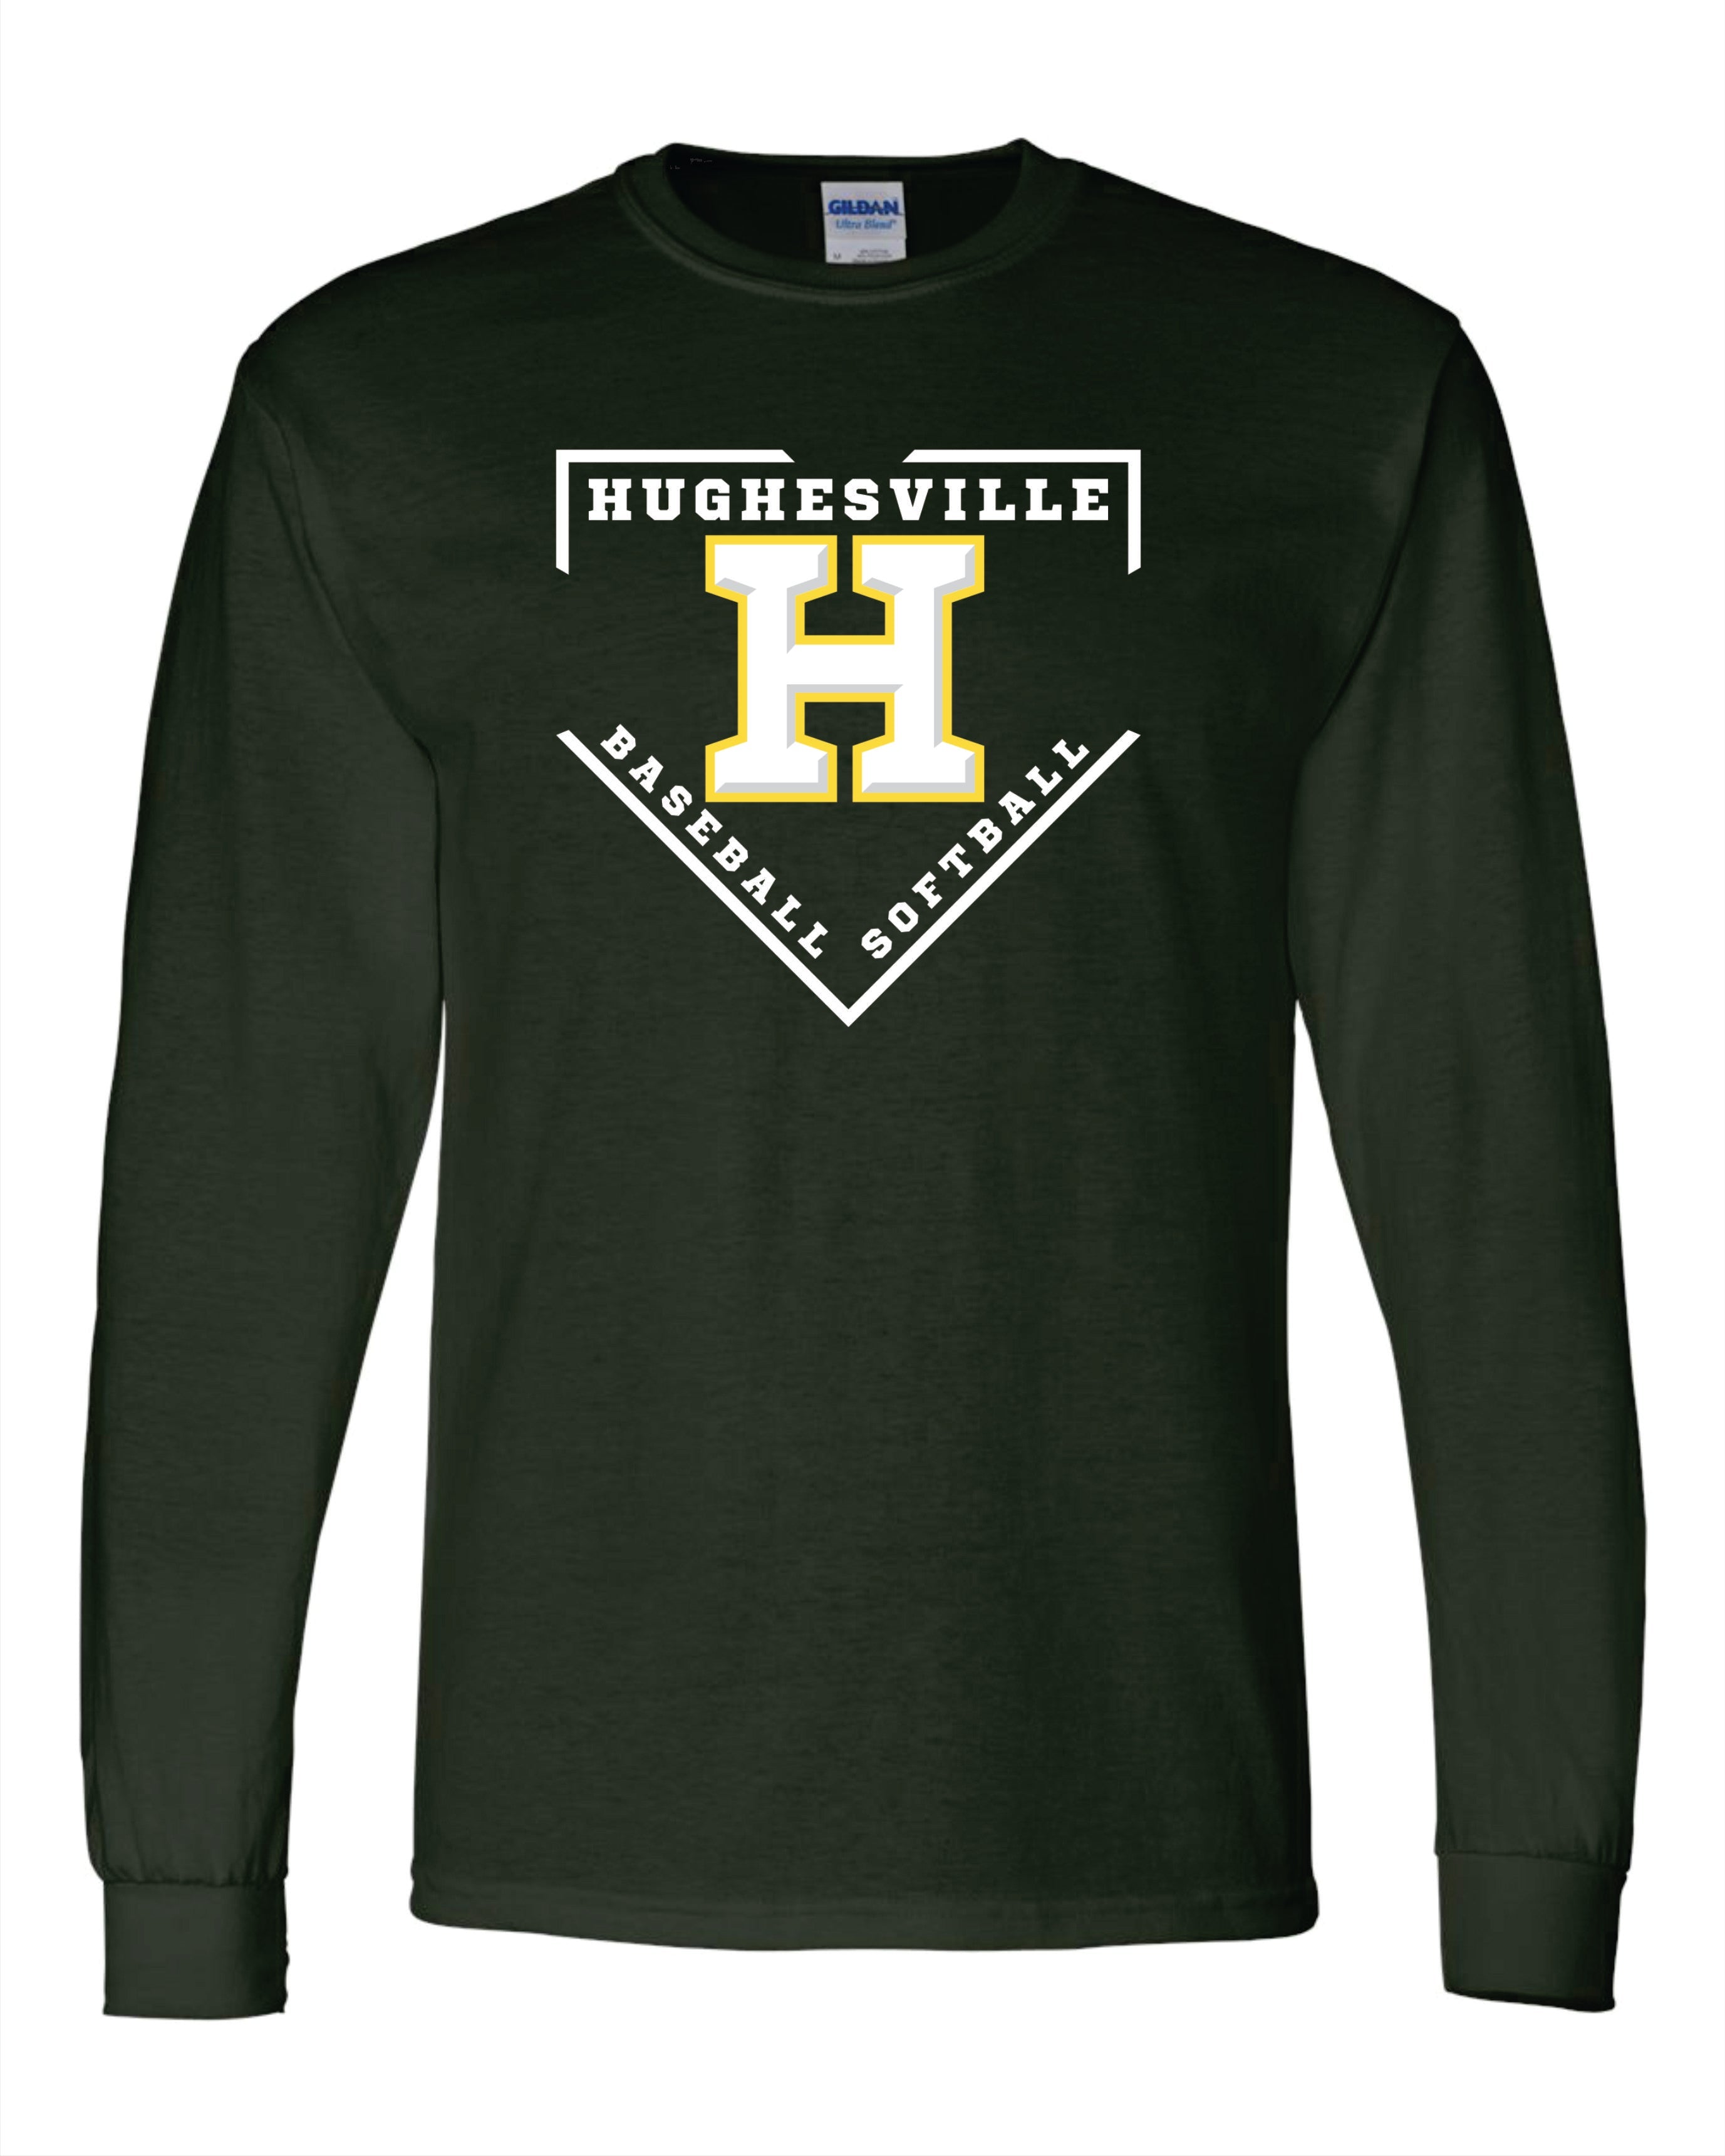 Hughesville LL 50/50 Long Sleeve T-Shirts YOUTH